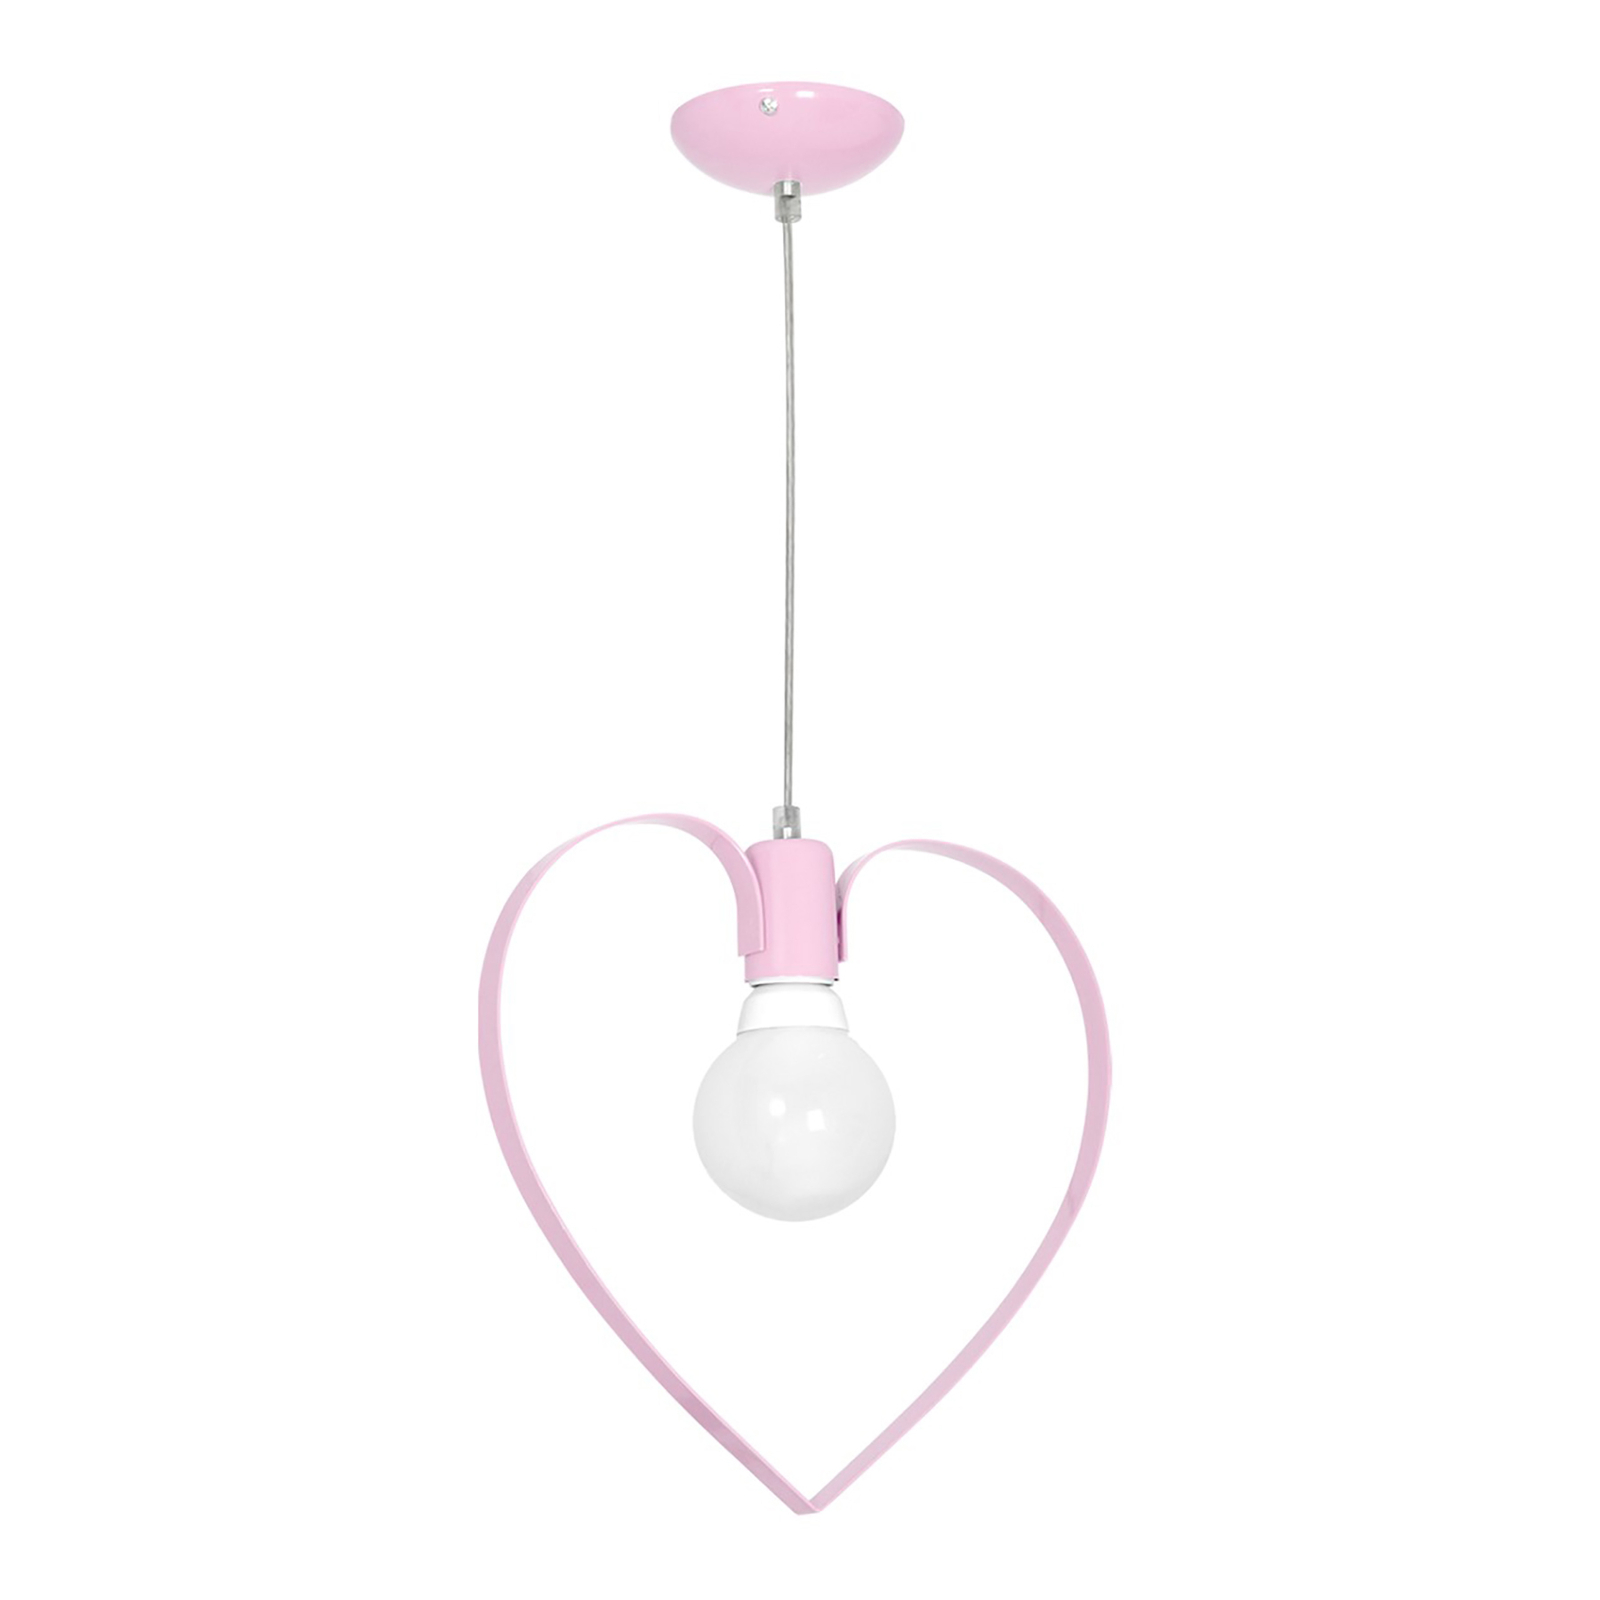 Amore pendant light, one-bulb, pink